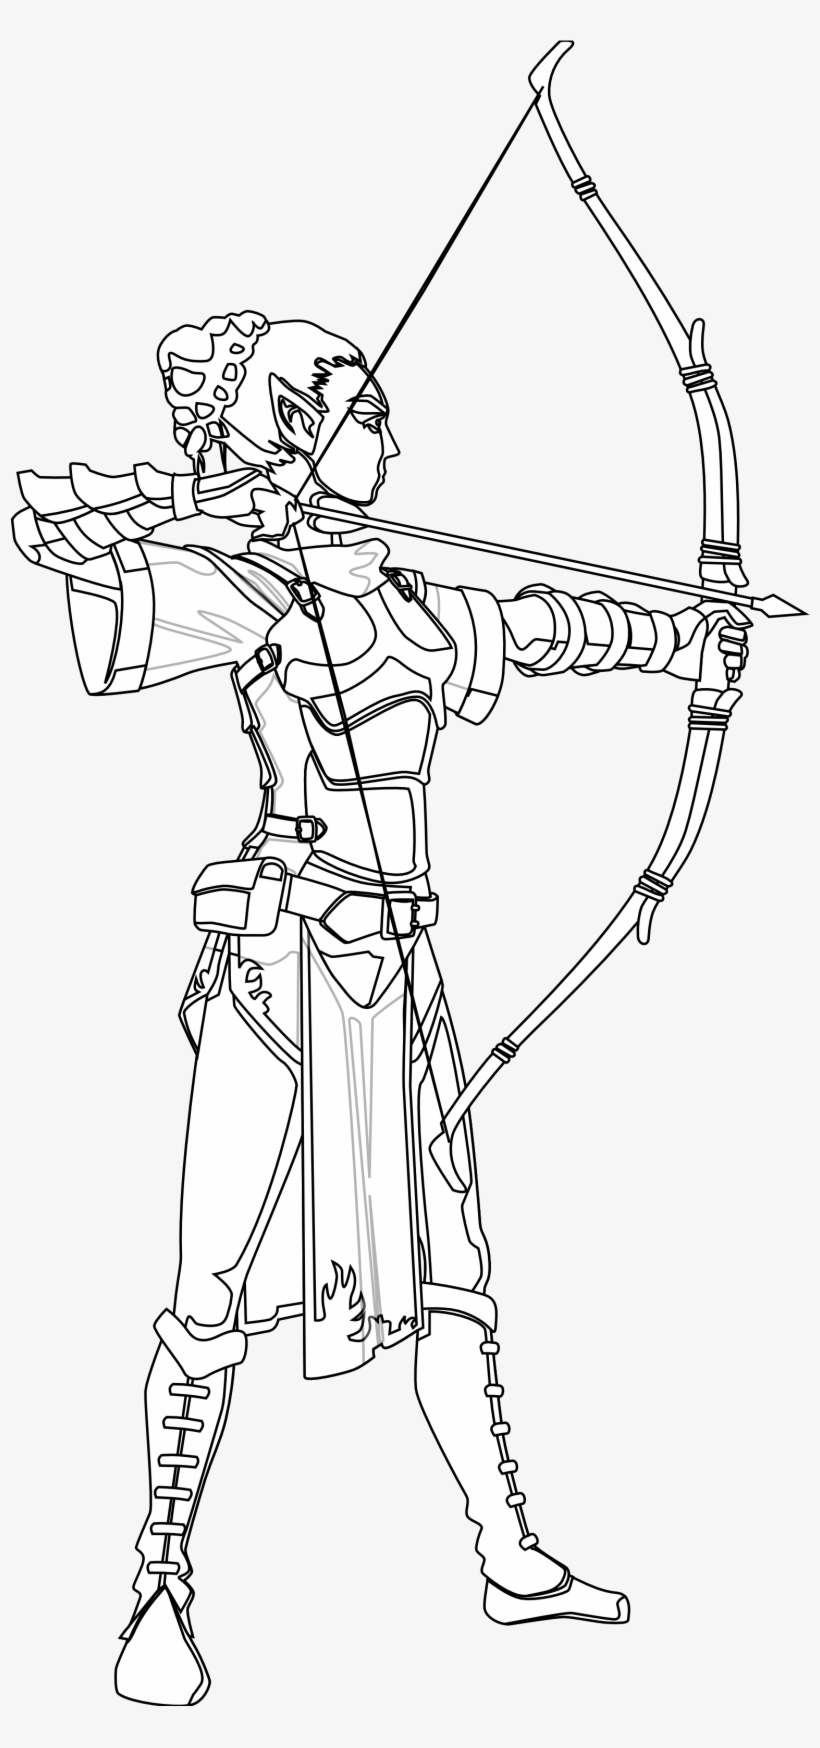 Archer - Archery Drawing, transparent png #2106830